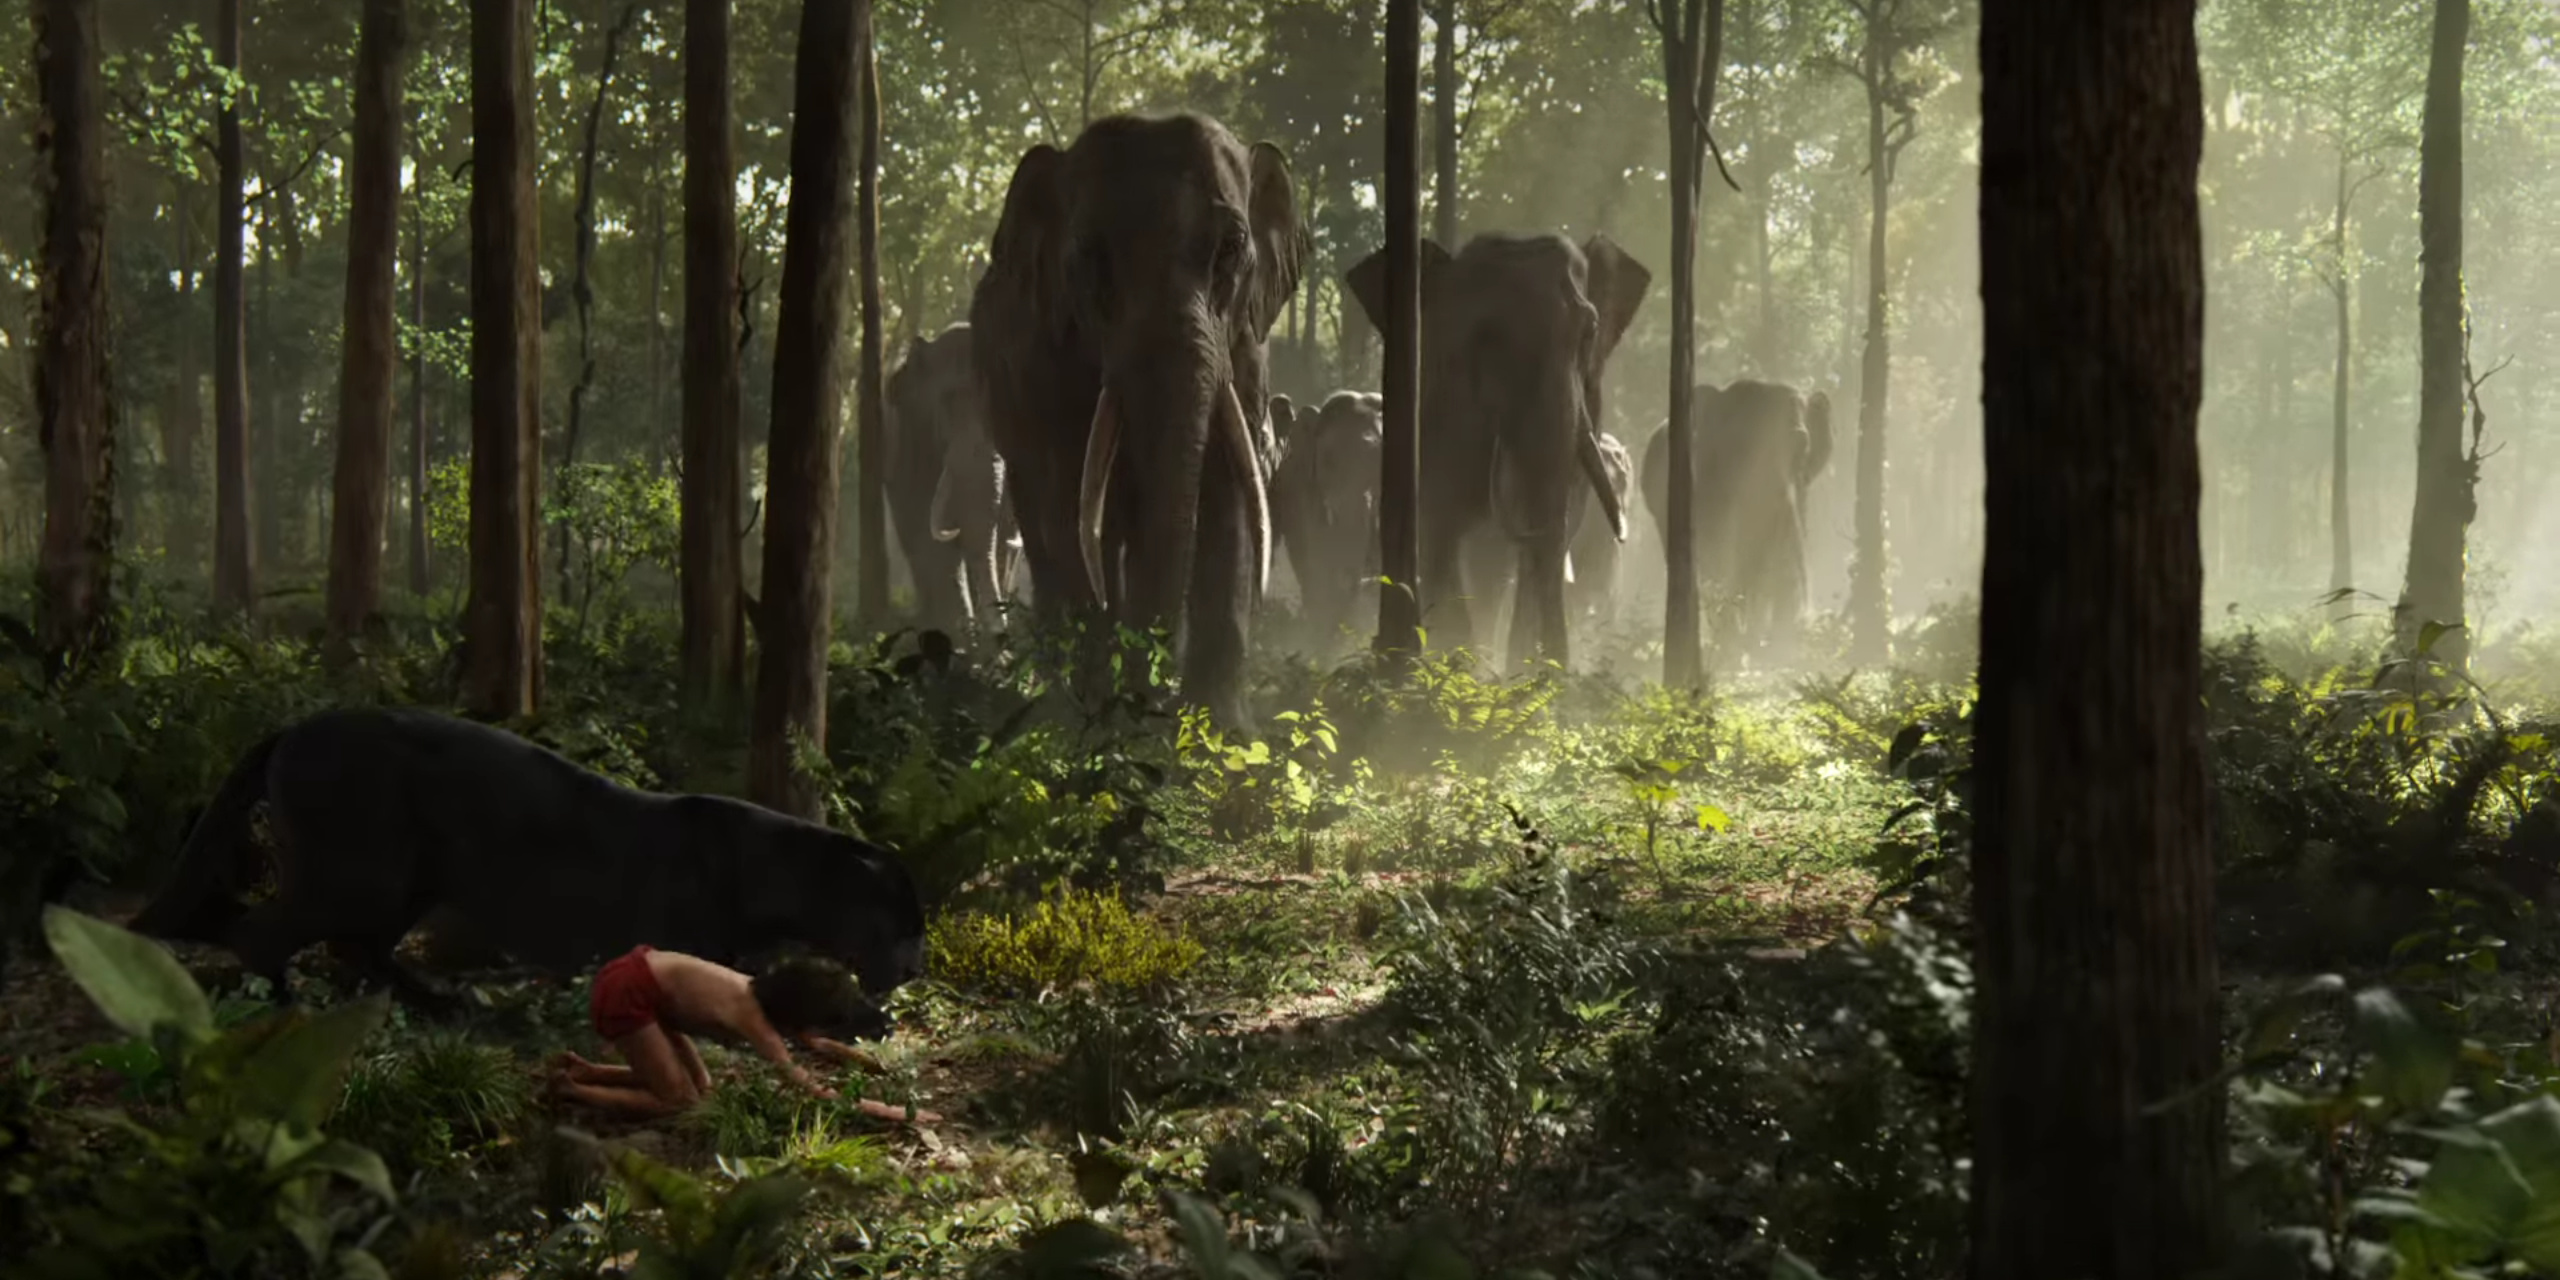 The Jungle Book (Movie), Earth's jungles, HQ 4K wallpapers, Nature's wonders, 2560x1280 Dual Screen Desktop